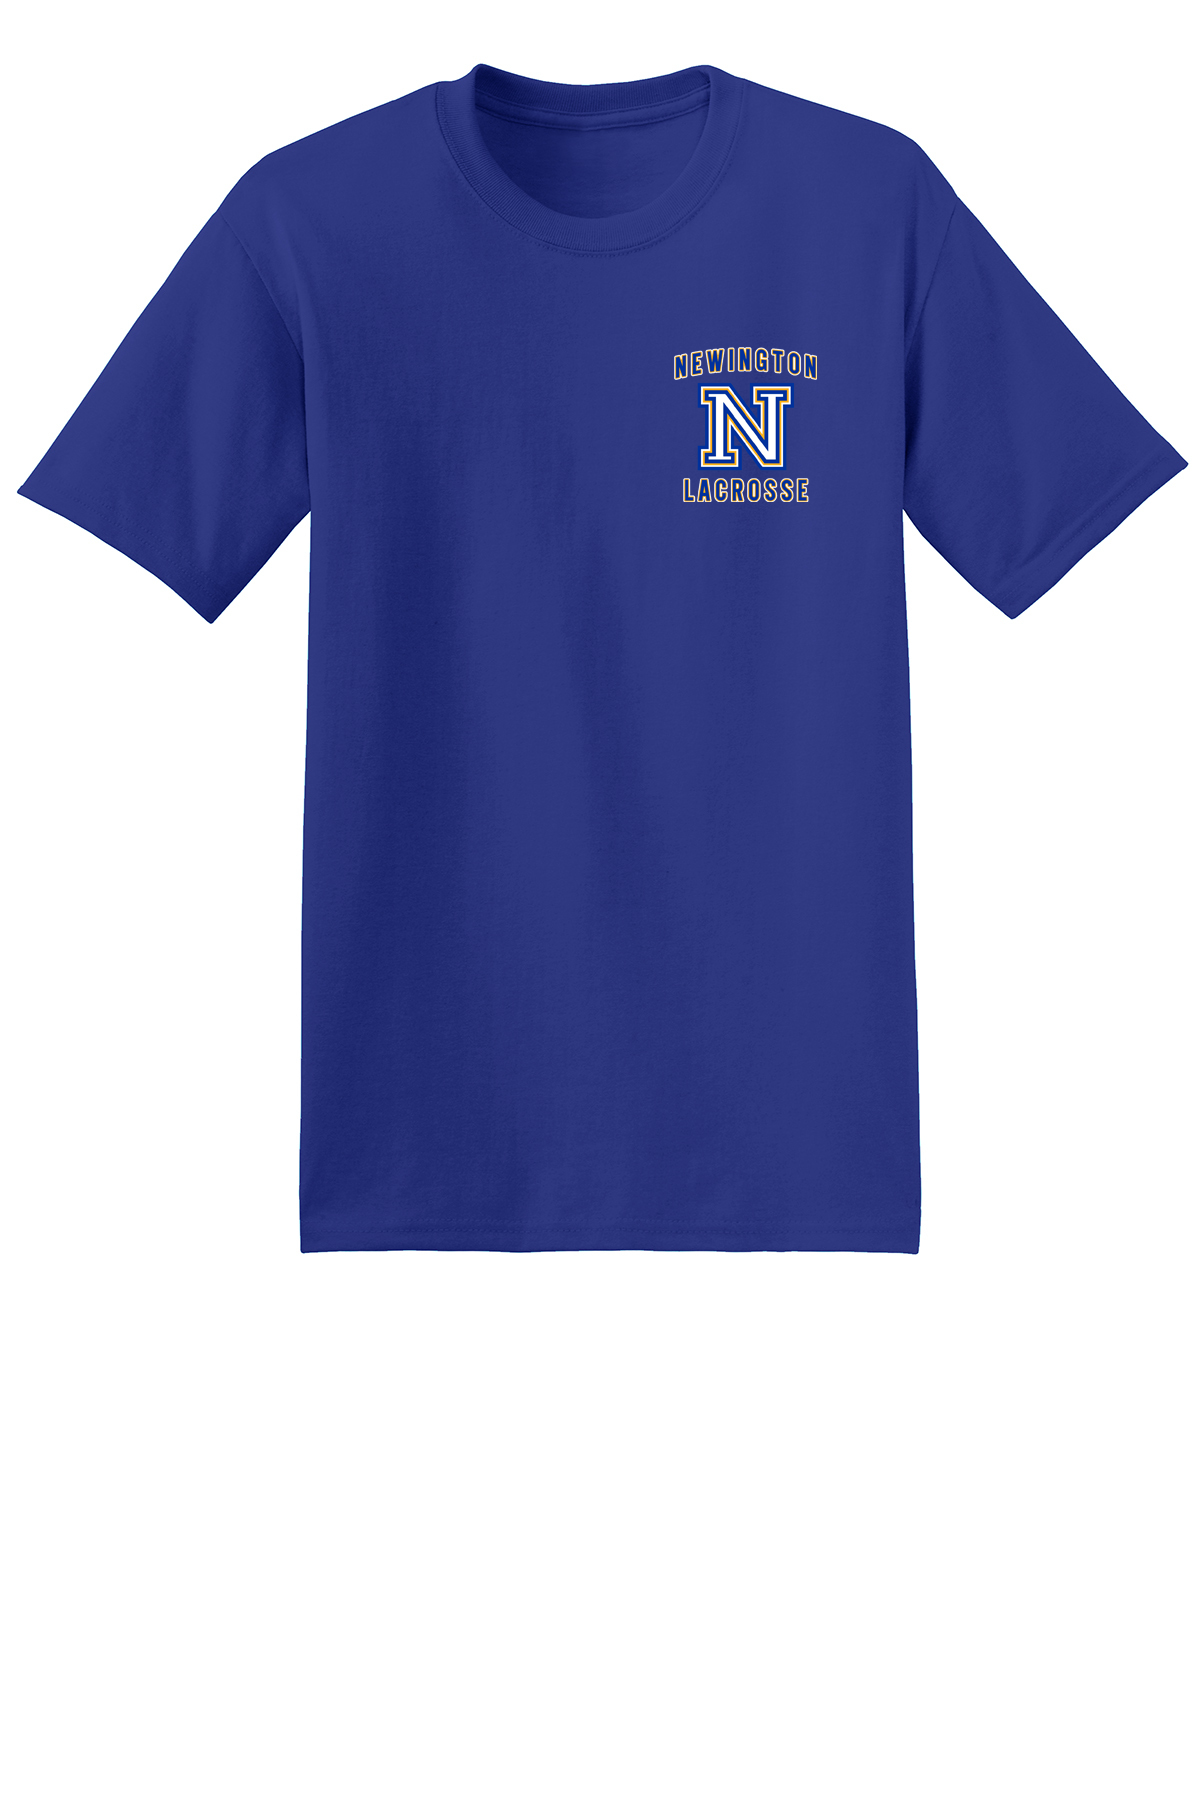 Newington Lacrosse Royal T-Shirt